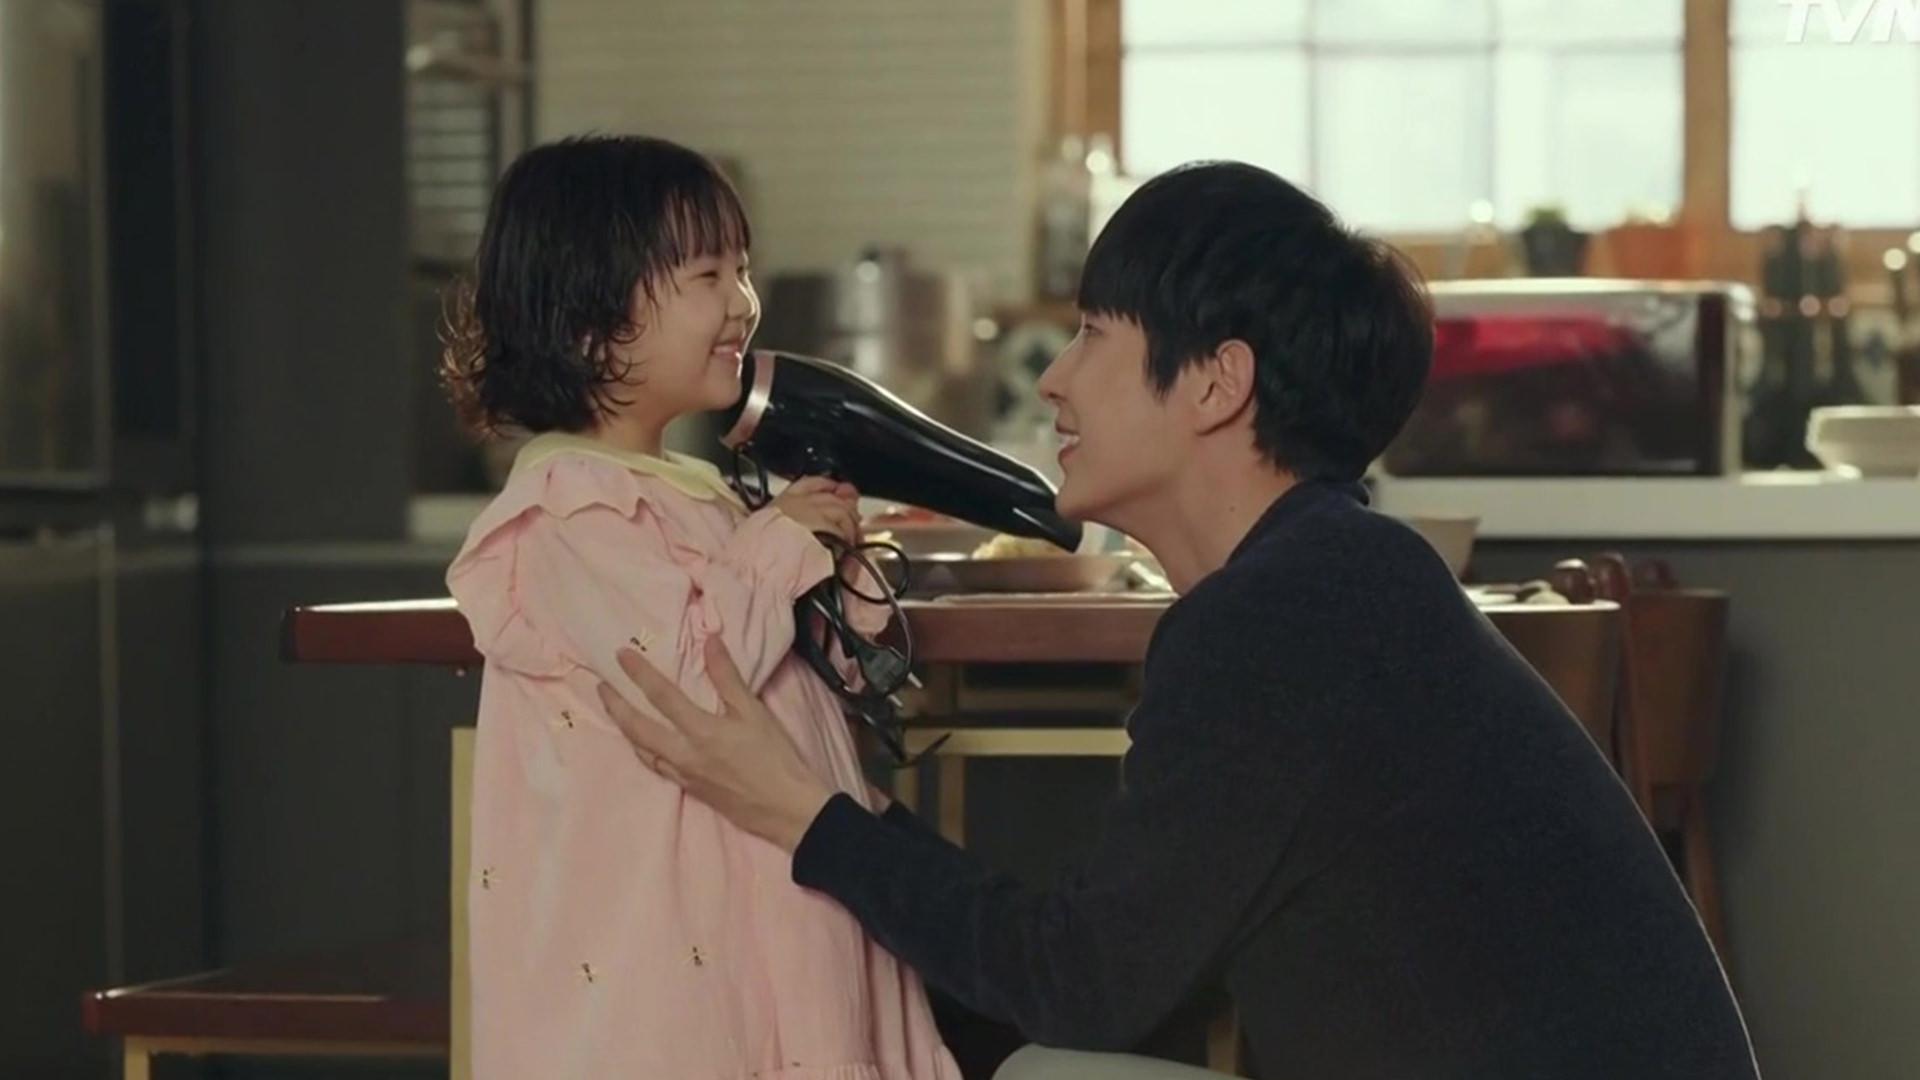 لی جوون کی و دخترش در سریال The Flower of Evil